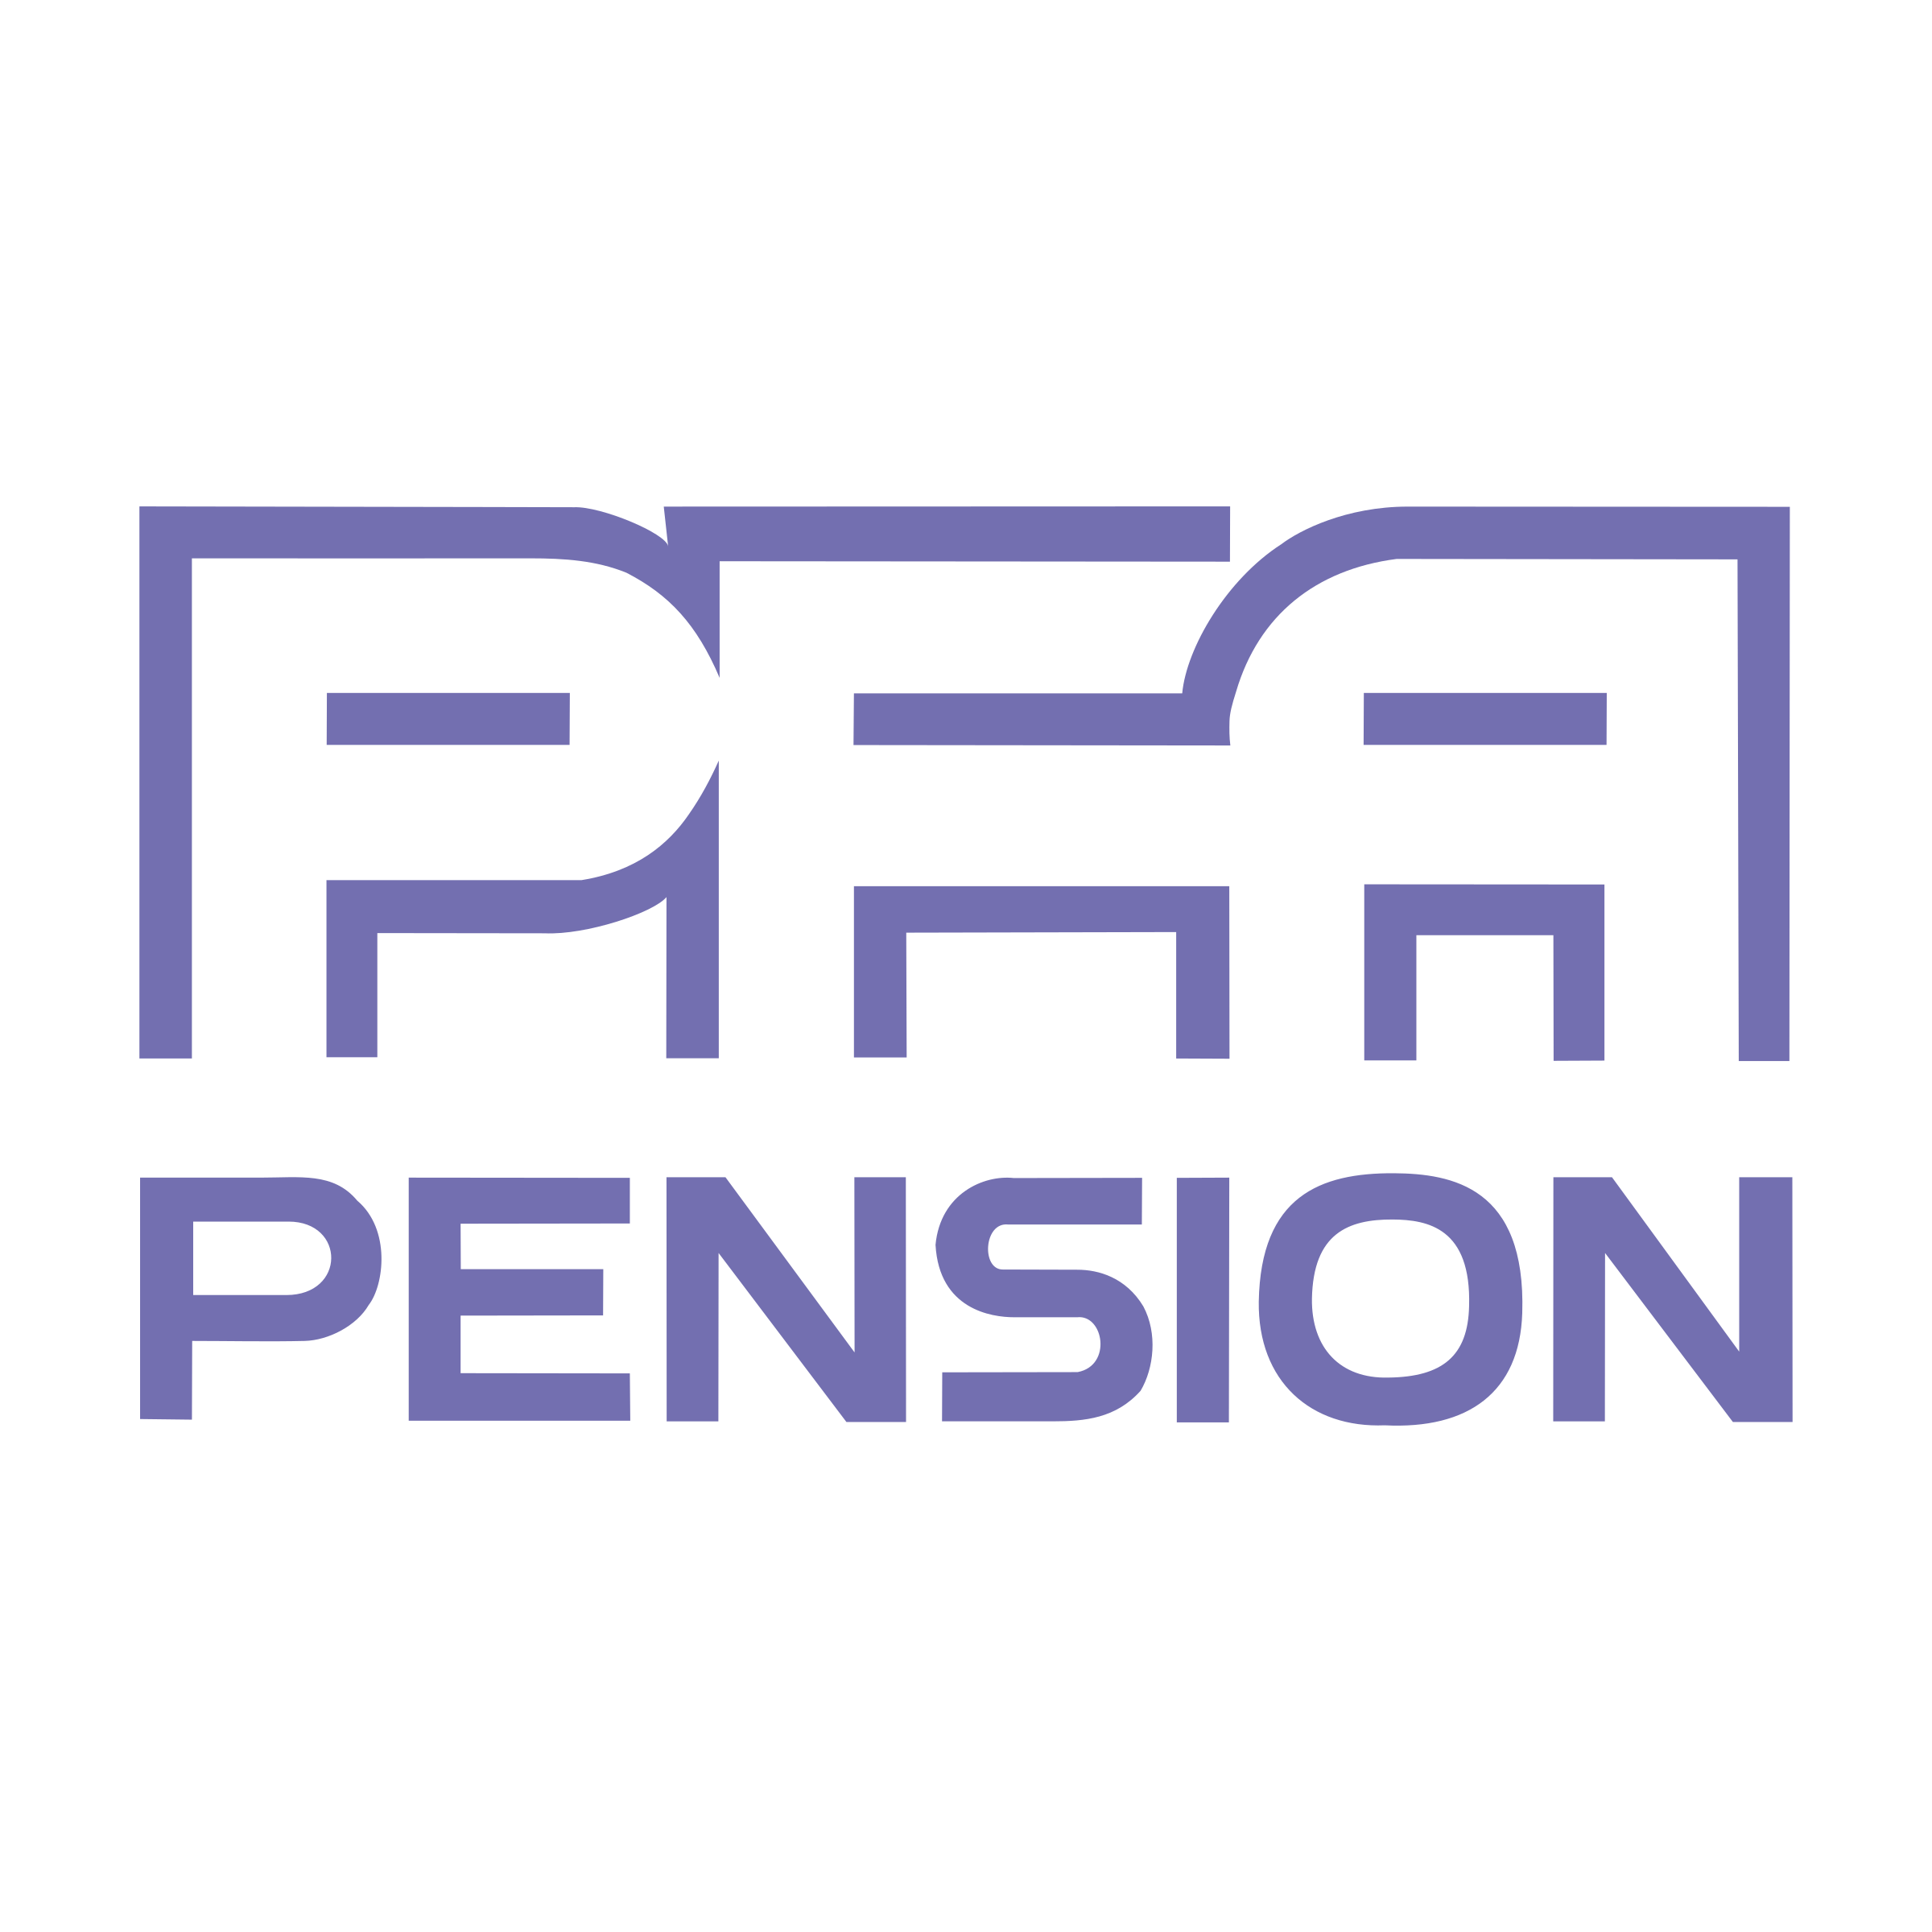 PFA Logo - PFA Pension Logo PNG Transparent & SVG Vector